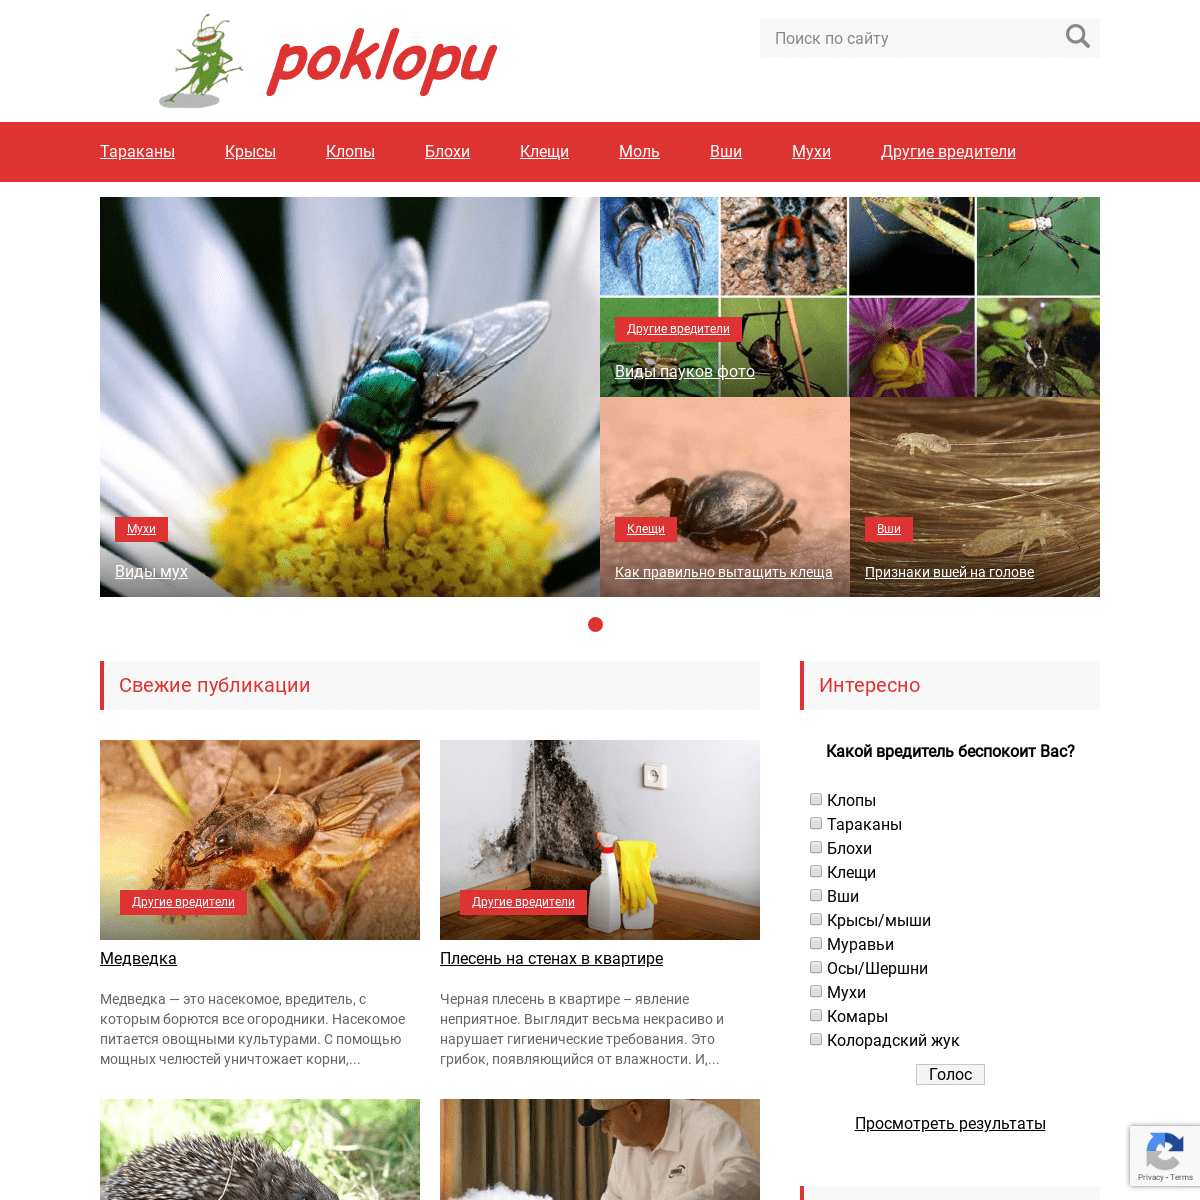 A complete backup of poklopu.ru